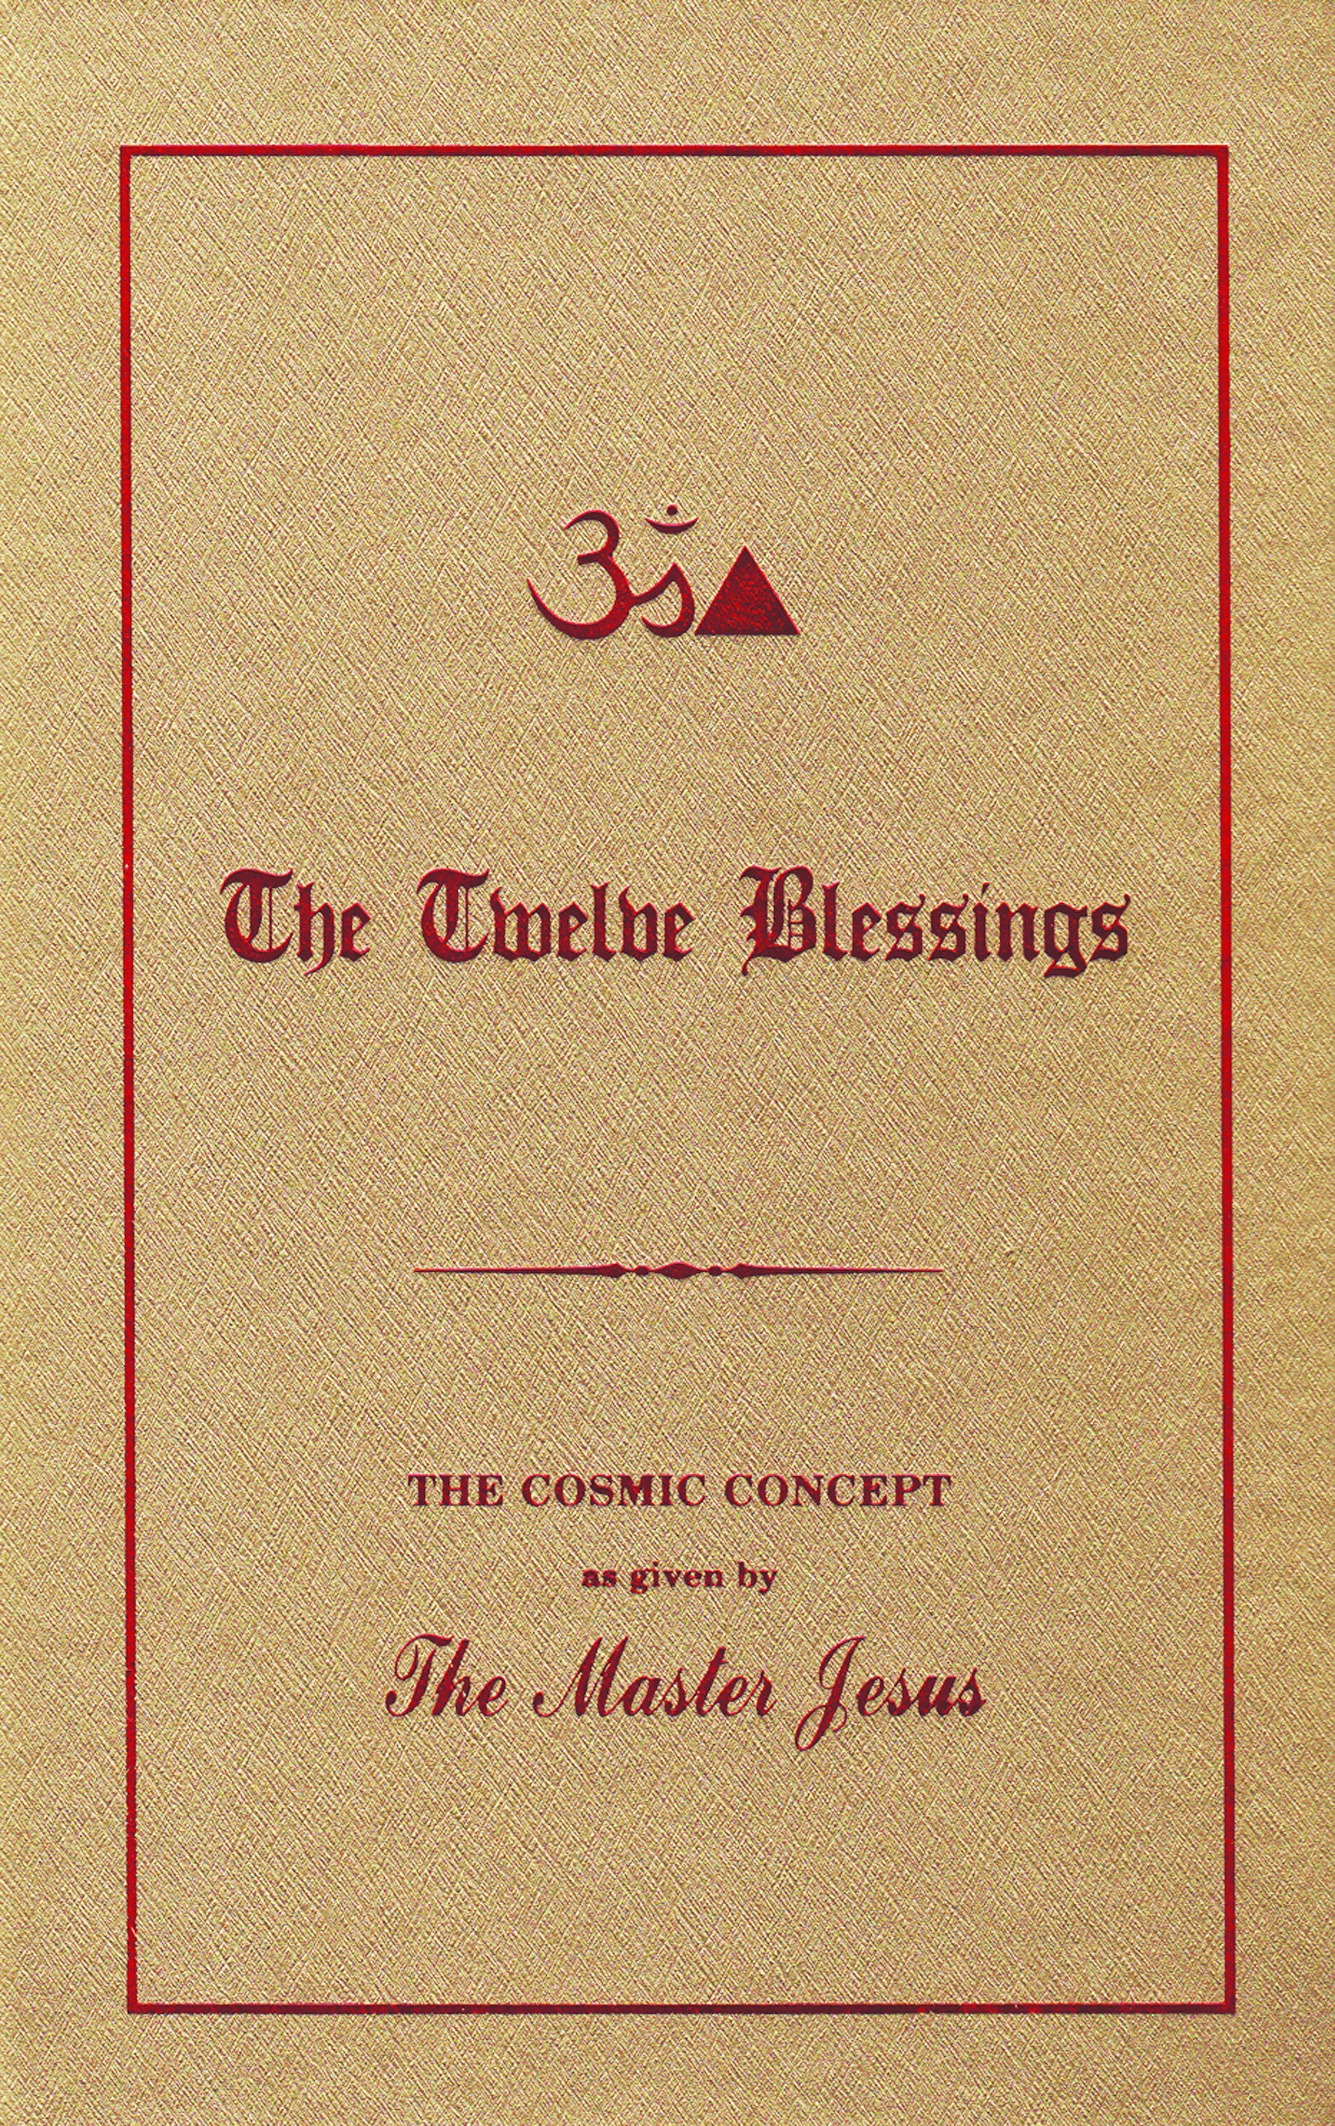 The Twelve Blessings